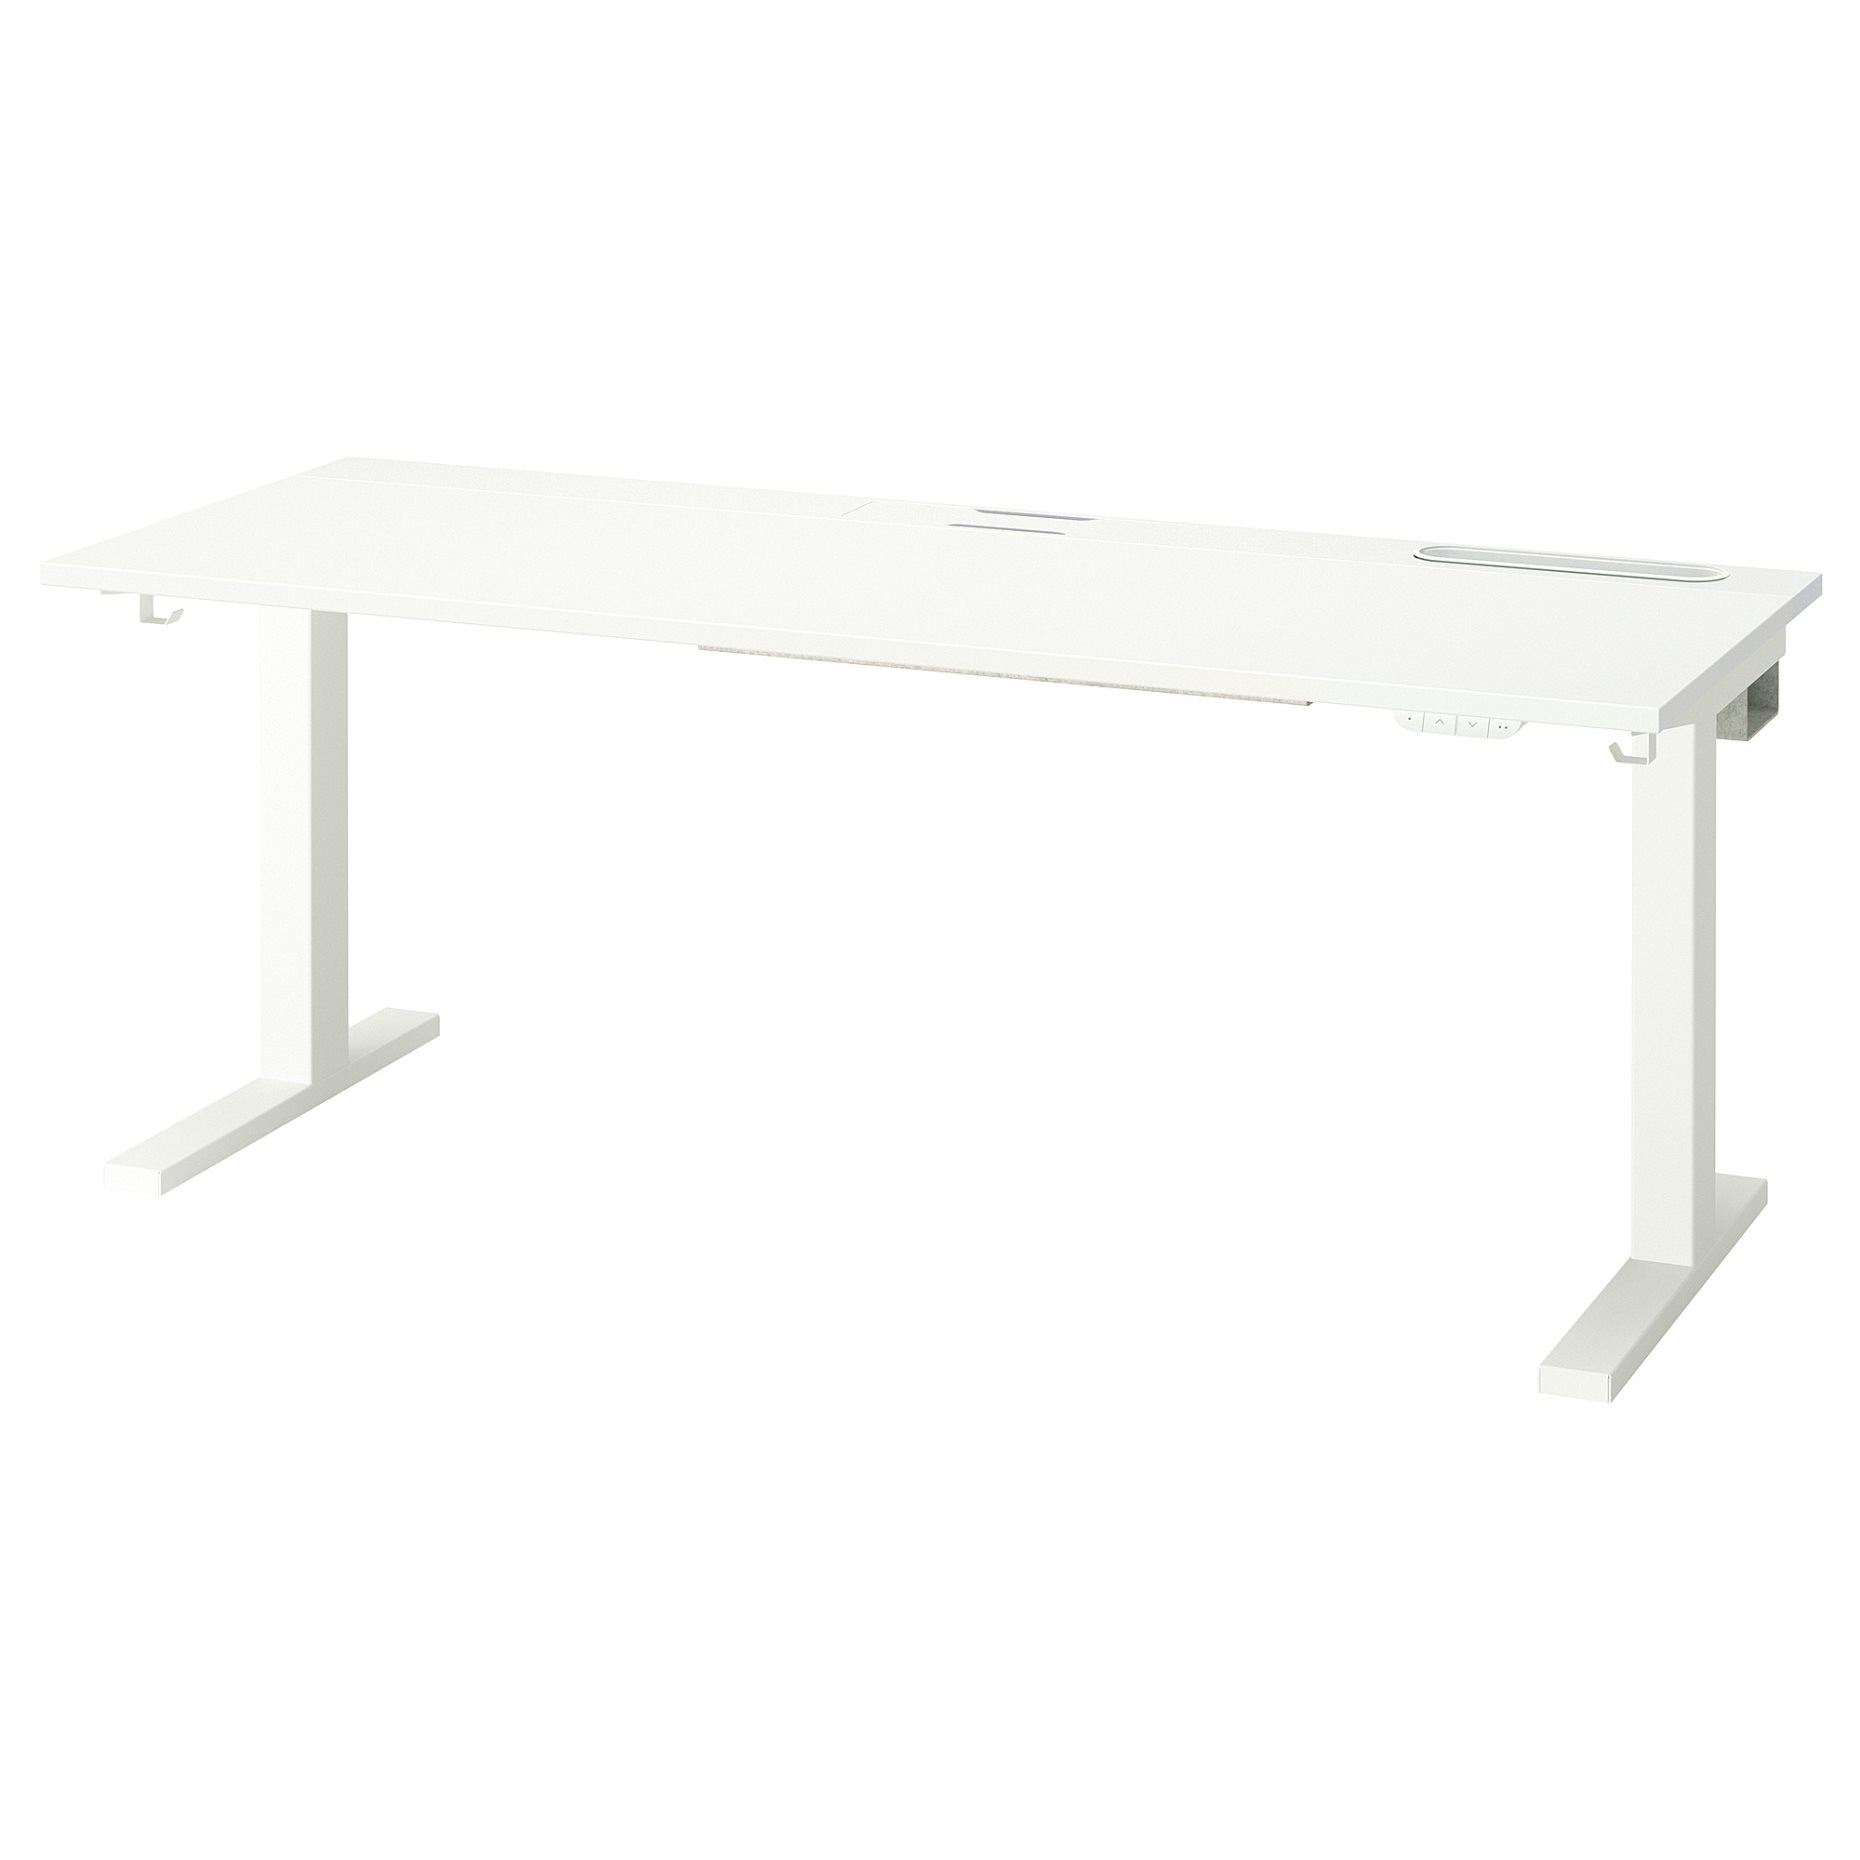 MITTZON, desk sit/stand/electric, 160x60 cm, 195.291.43